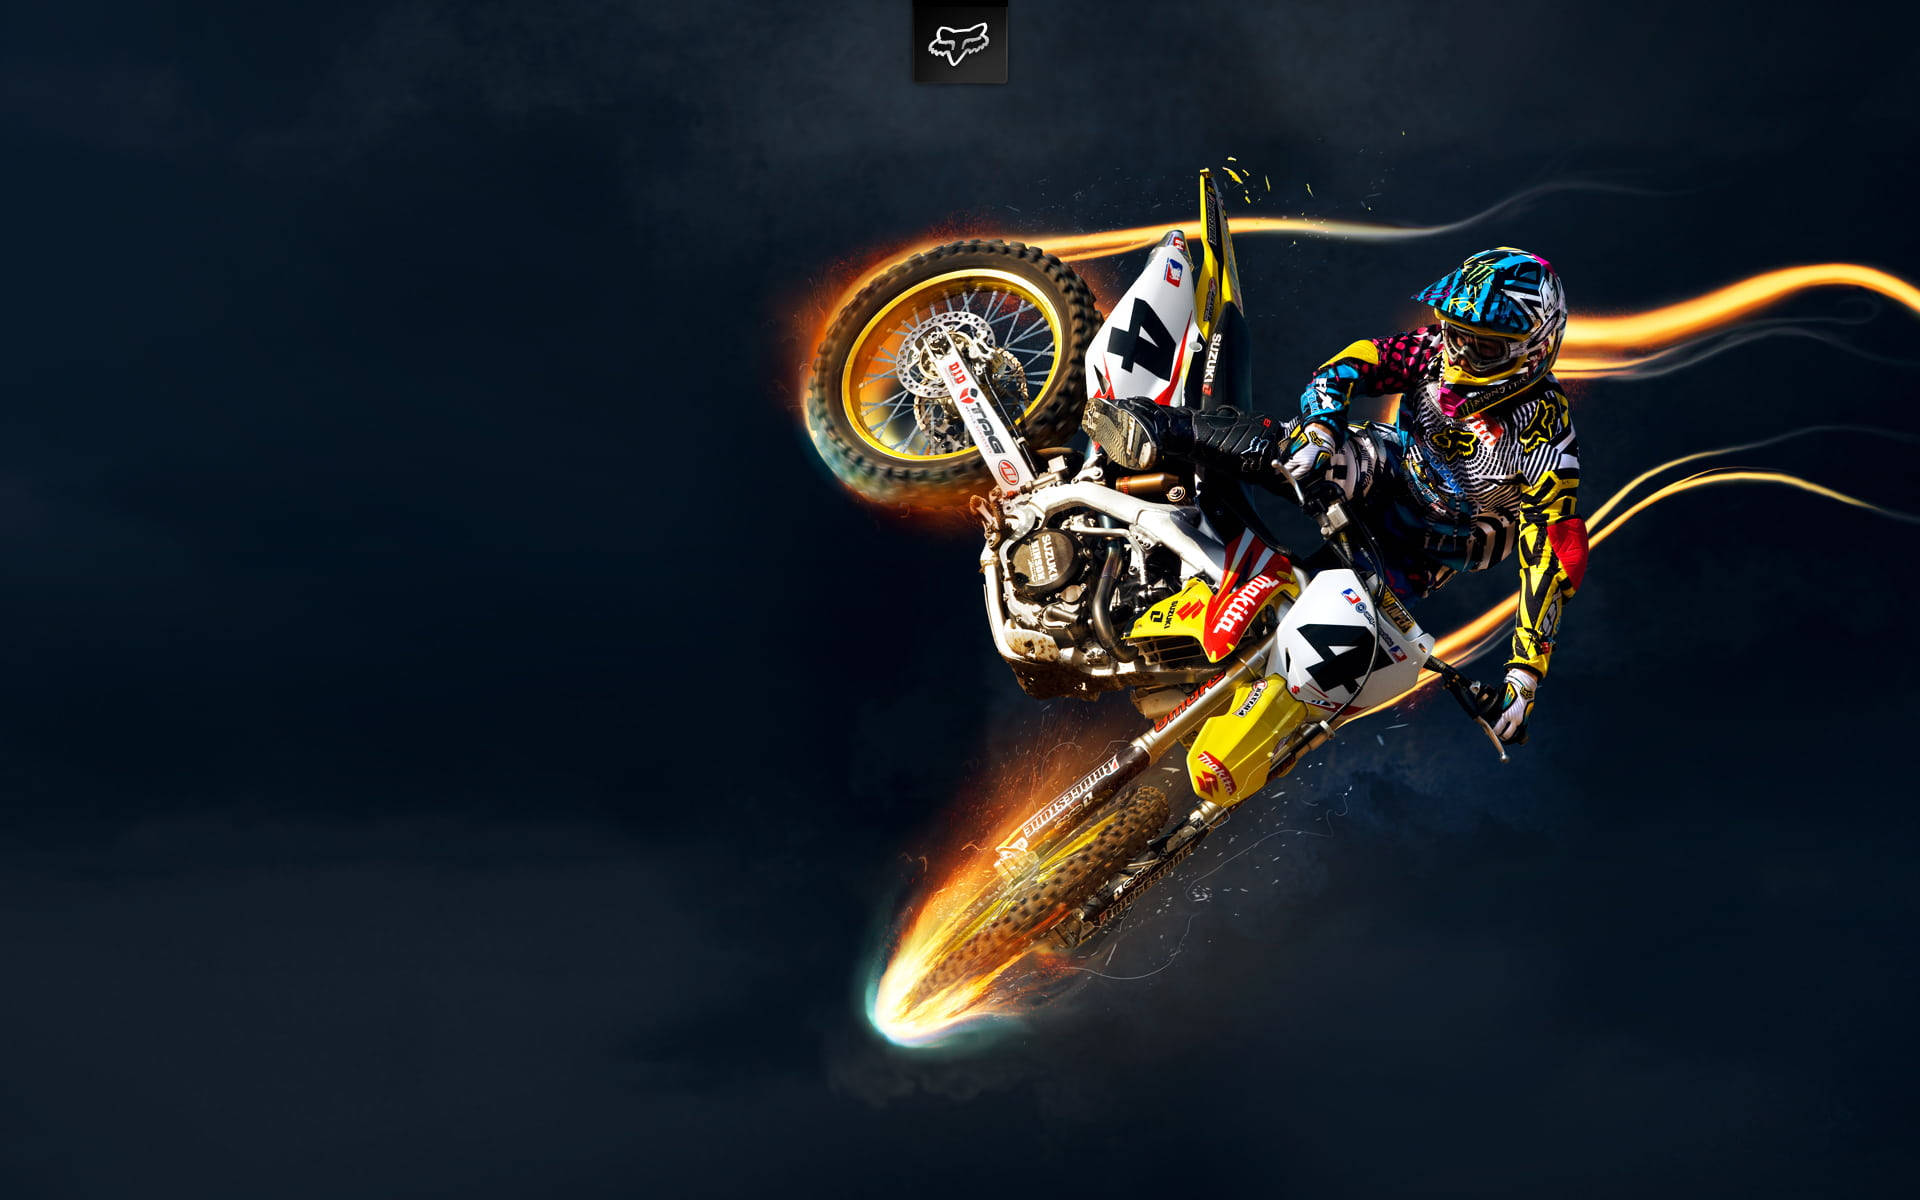 Flaming Motocross Bike On A Dark Background Background